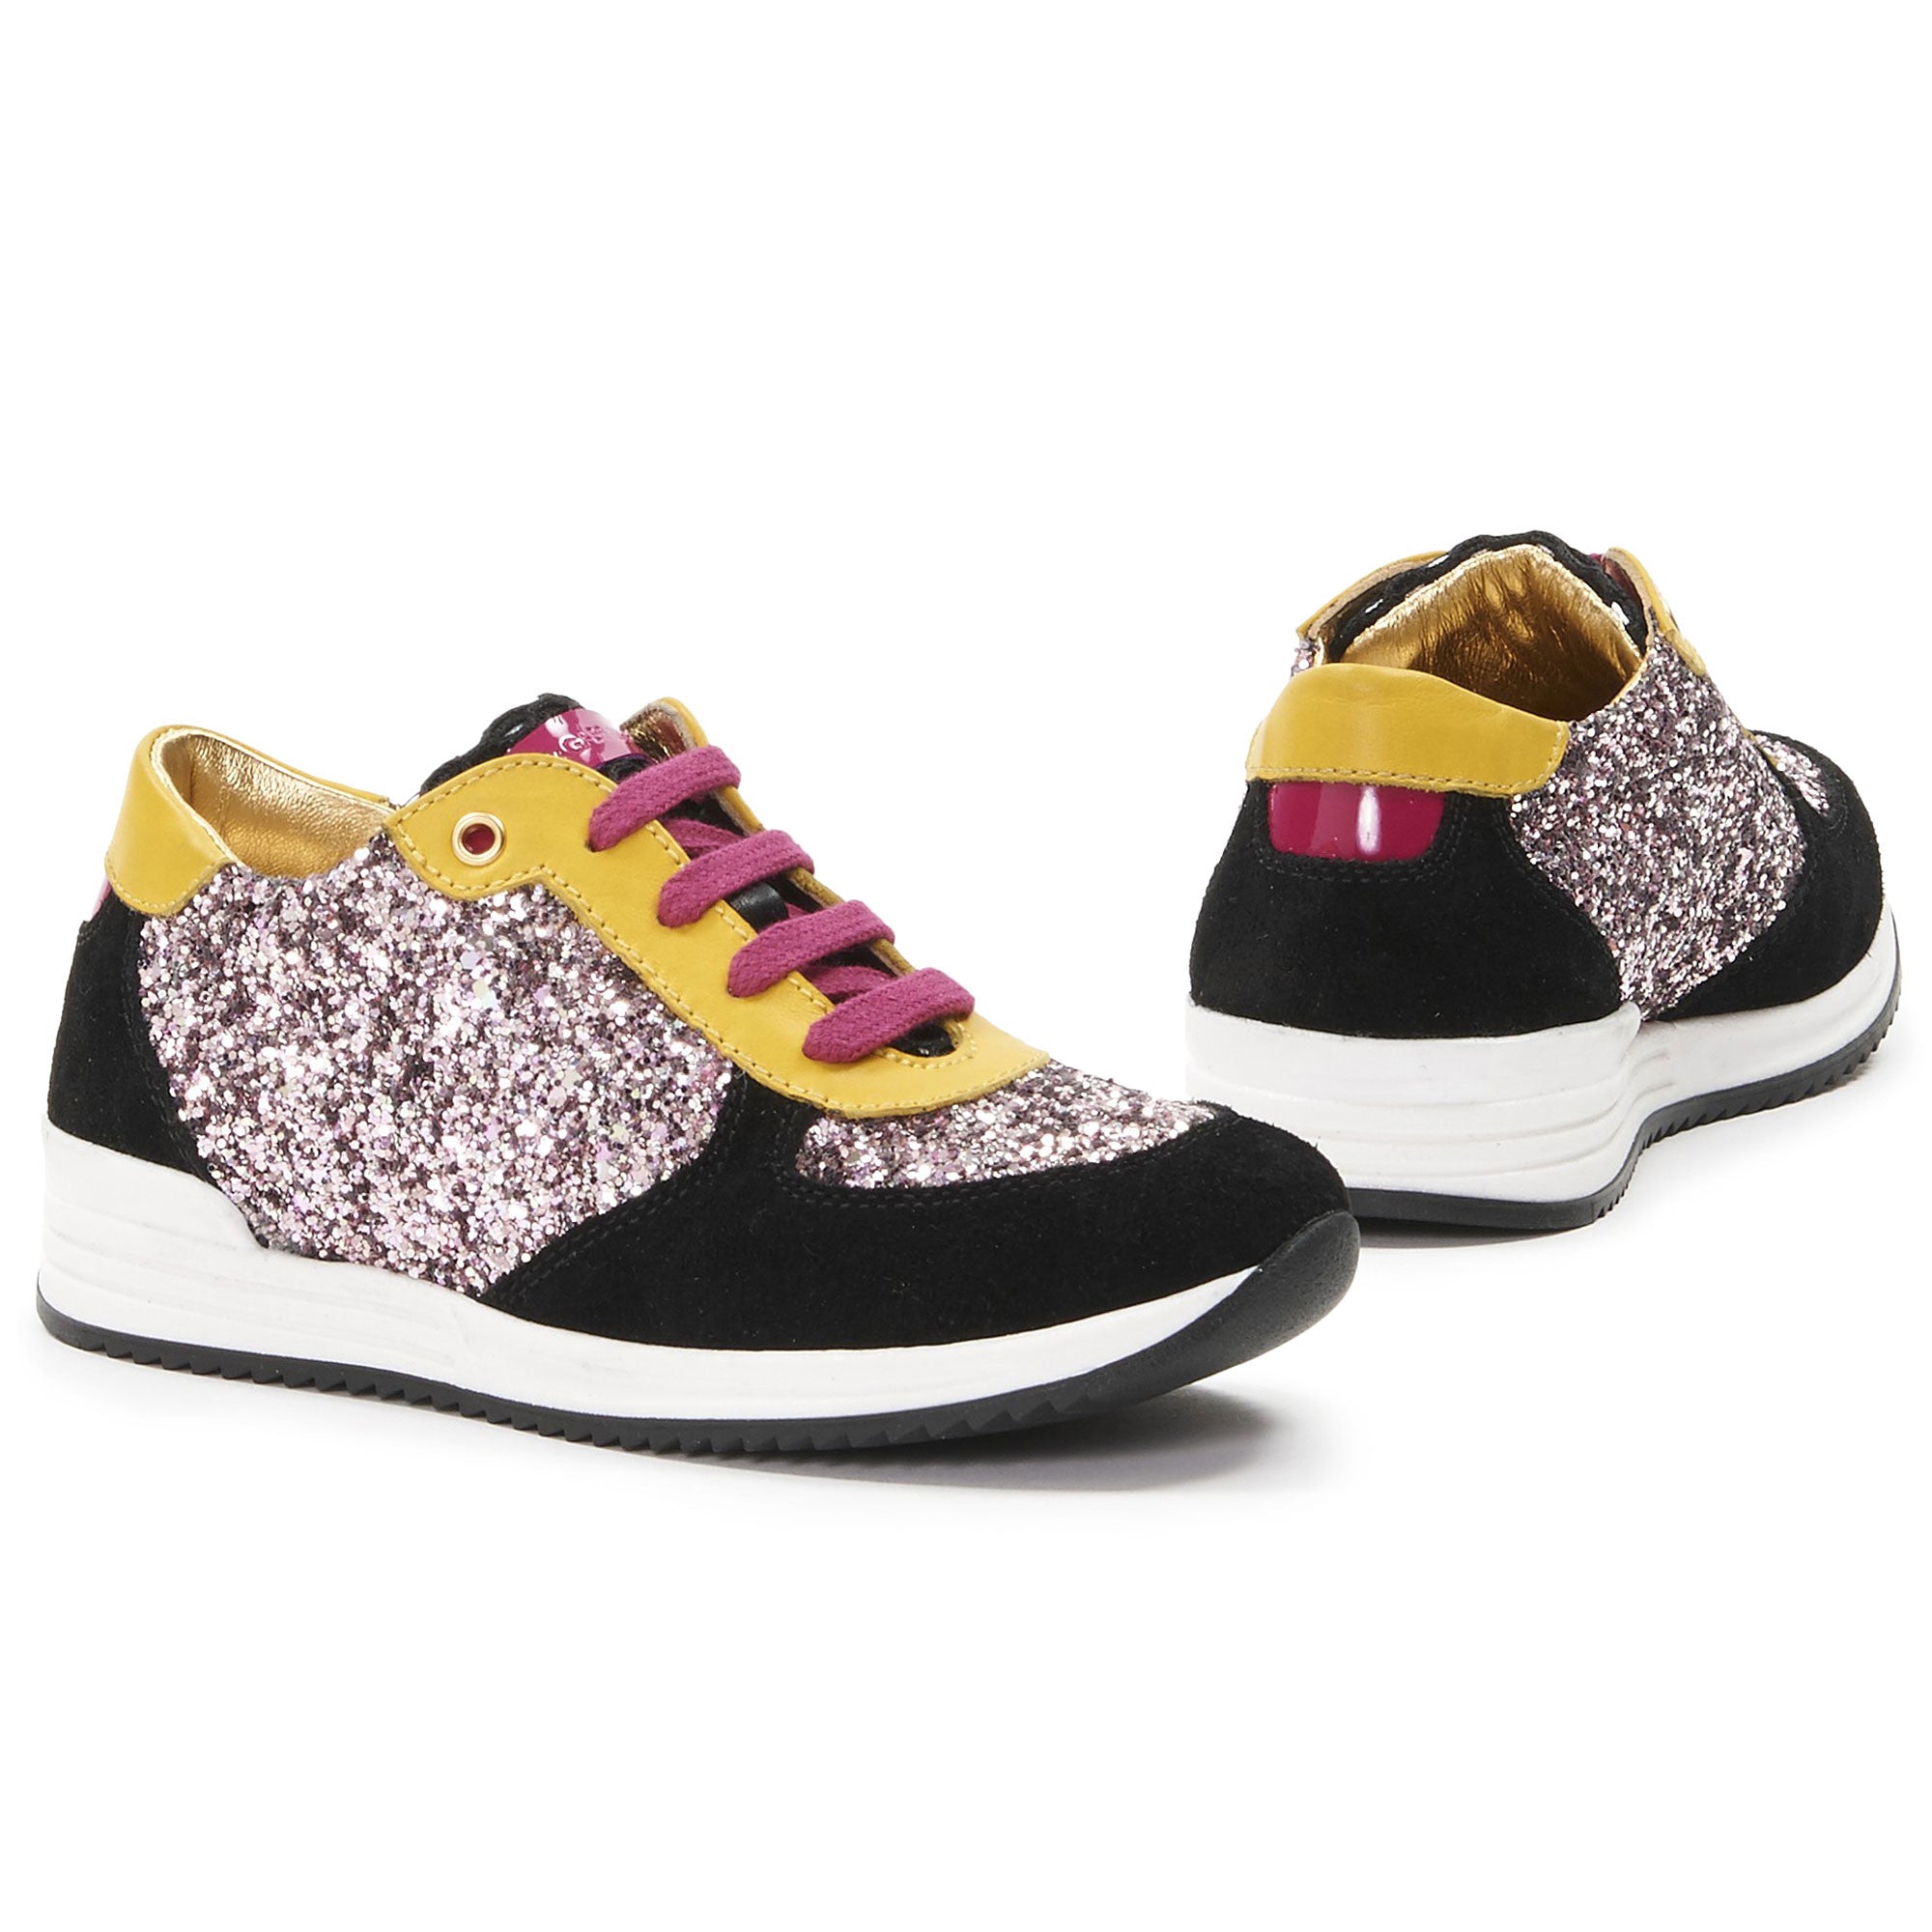 Girls Black & Gold Suede Shoes - CÉMAROSE | Children's Fashion Store